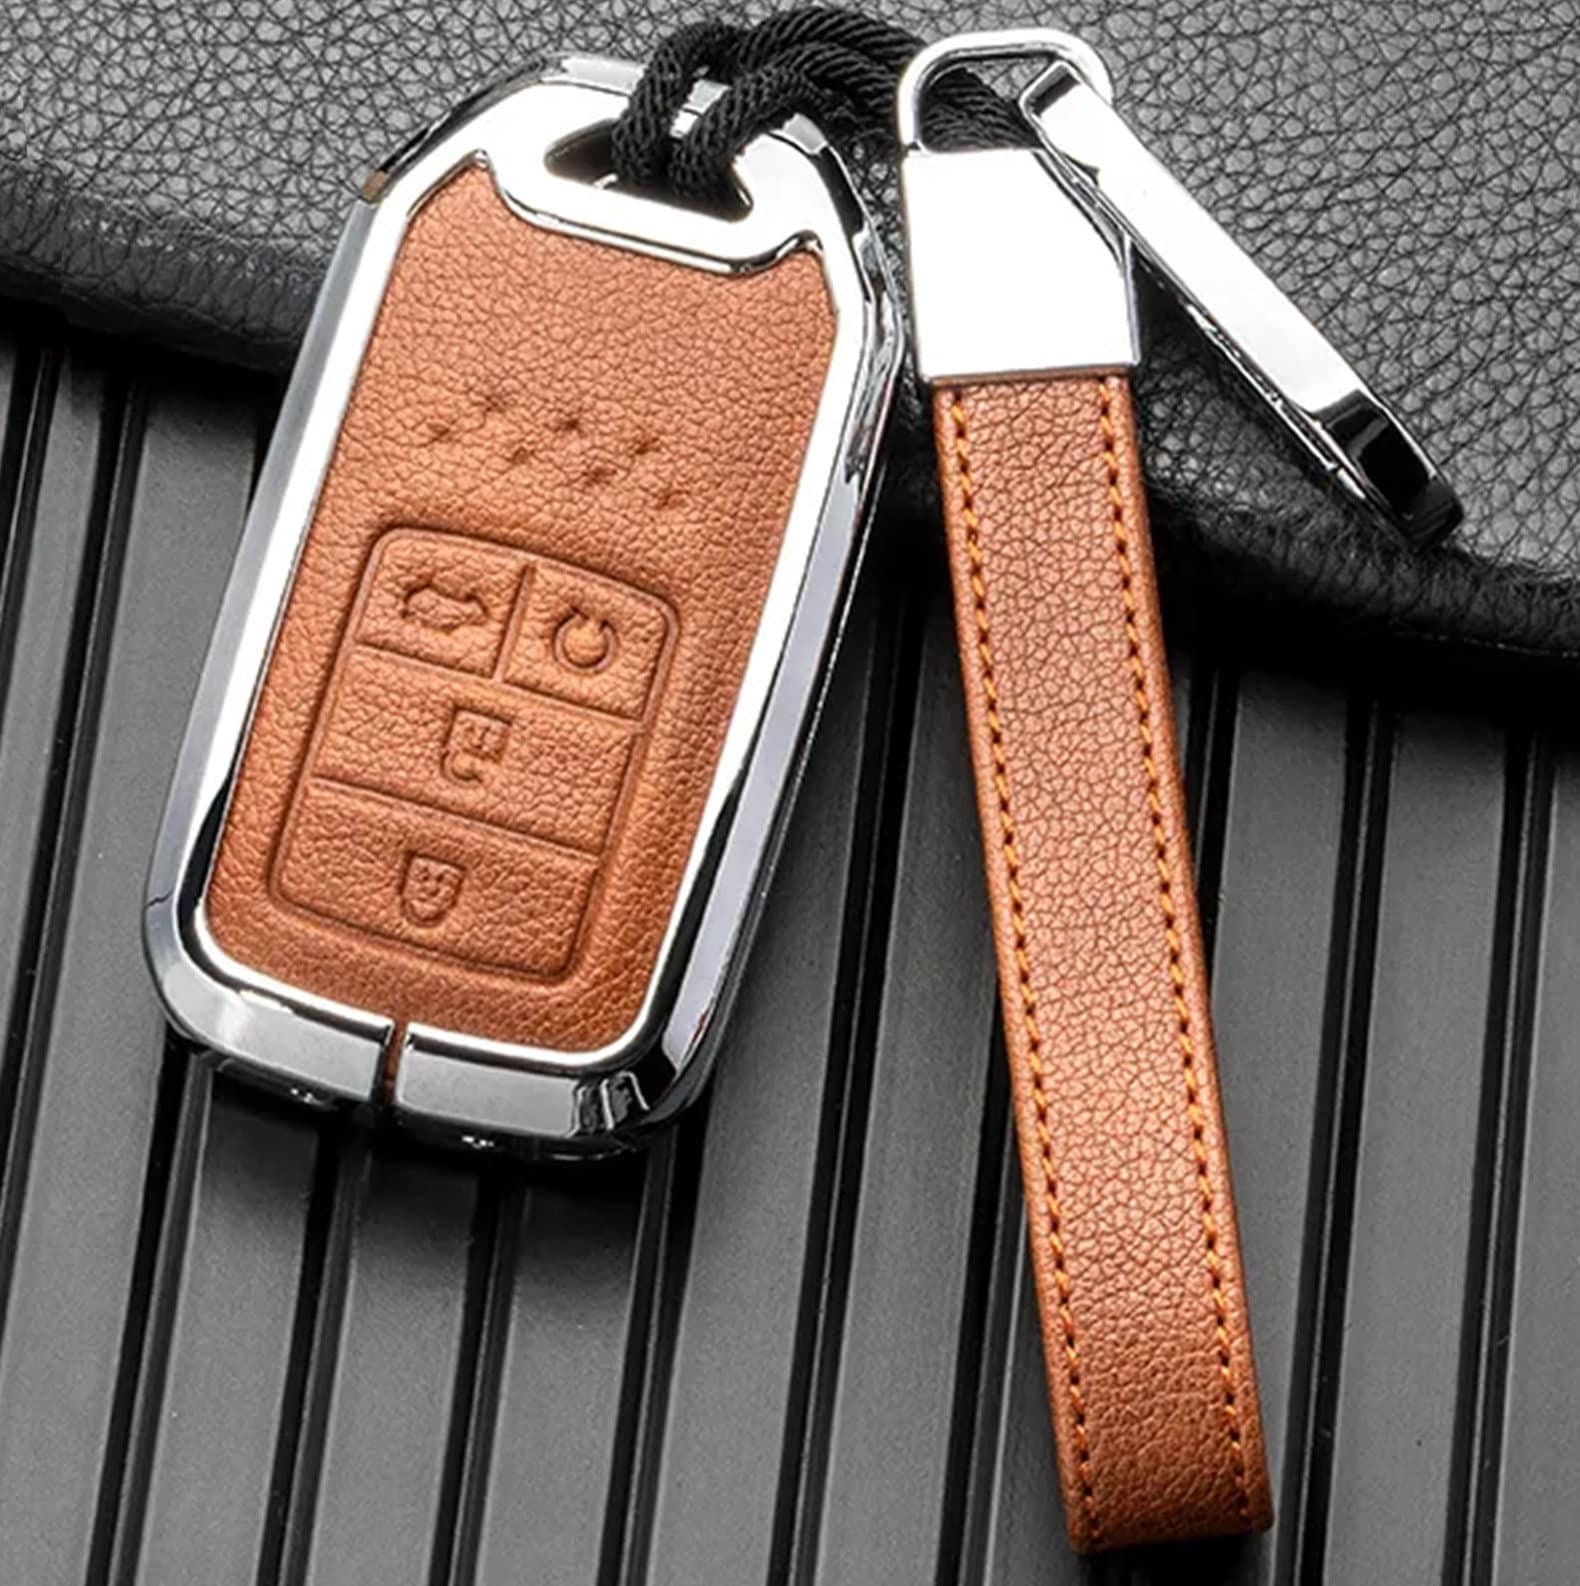 Car Key Fob Keyring Replacement for Honda Accord Civic CR-V CRV Pilot EX  EX-L Travel，Honda Car Accessories Car Keychain Key Ring for Men and Women